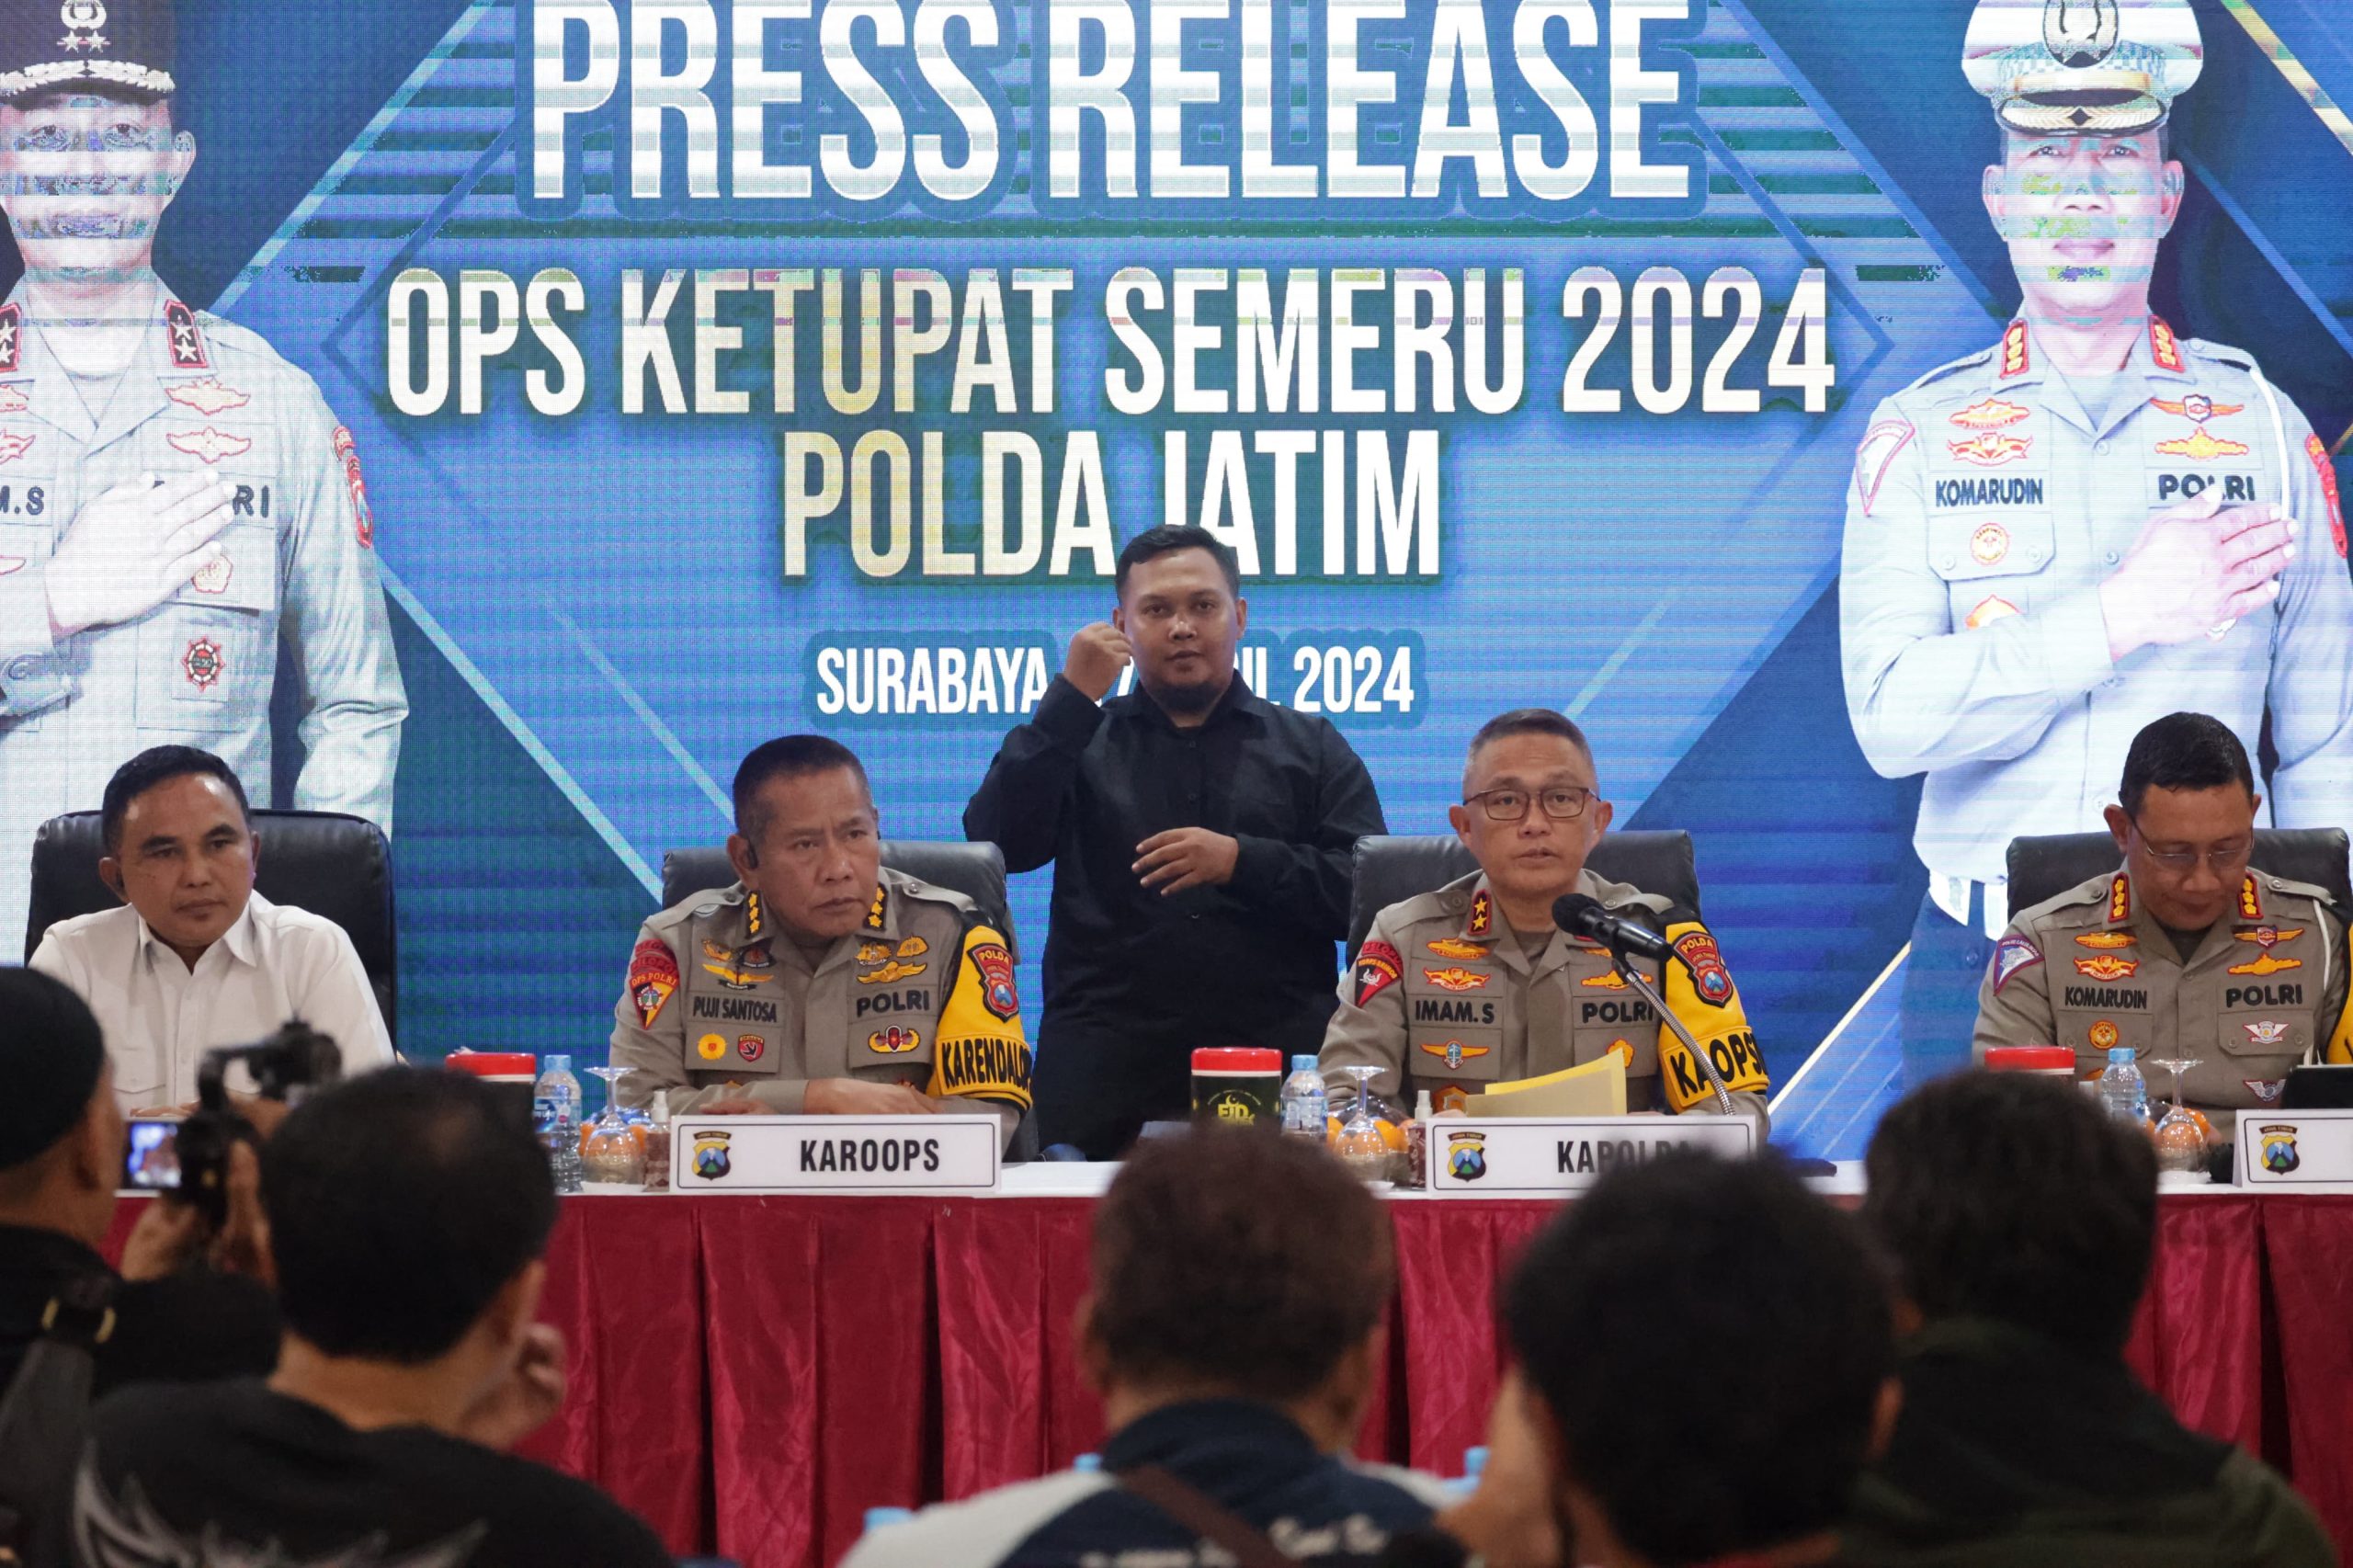 Operasi Ketupat Semeru 2024, Polda Jatim Berhasil Tekan Angka Kecelakaan dan Gangguan Kamtibmas